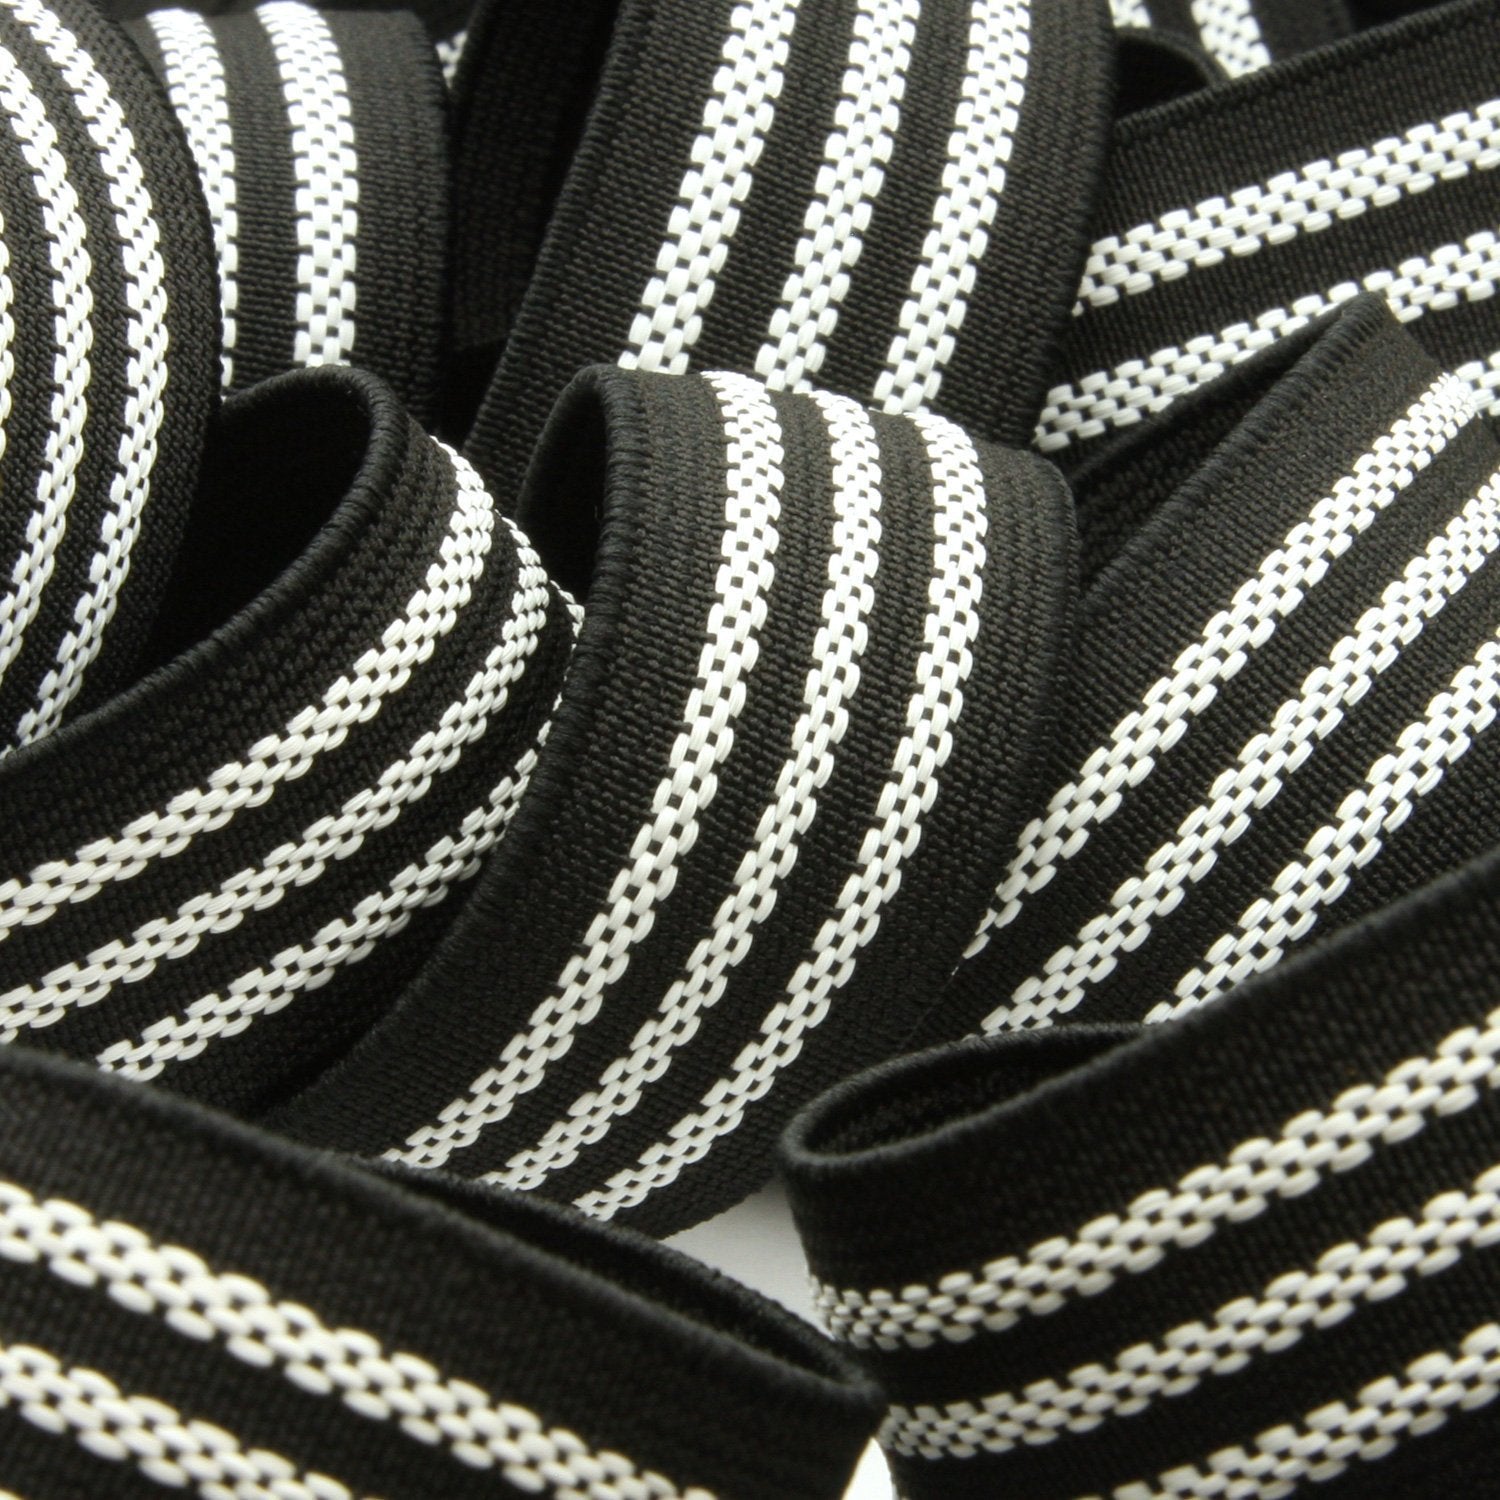 FUJIYAMA RIBBON [Wholesale] Non-Slip Band 30mm Black & White 30 Meters Roll